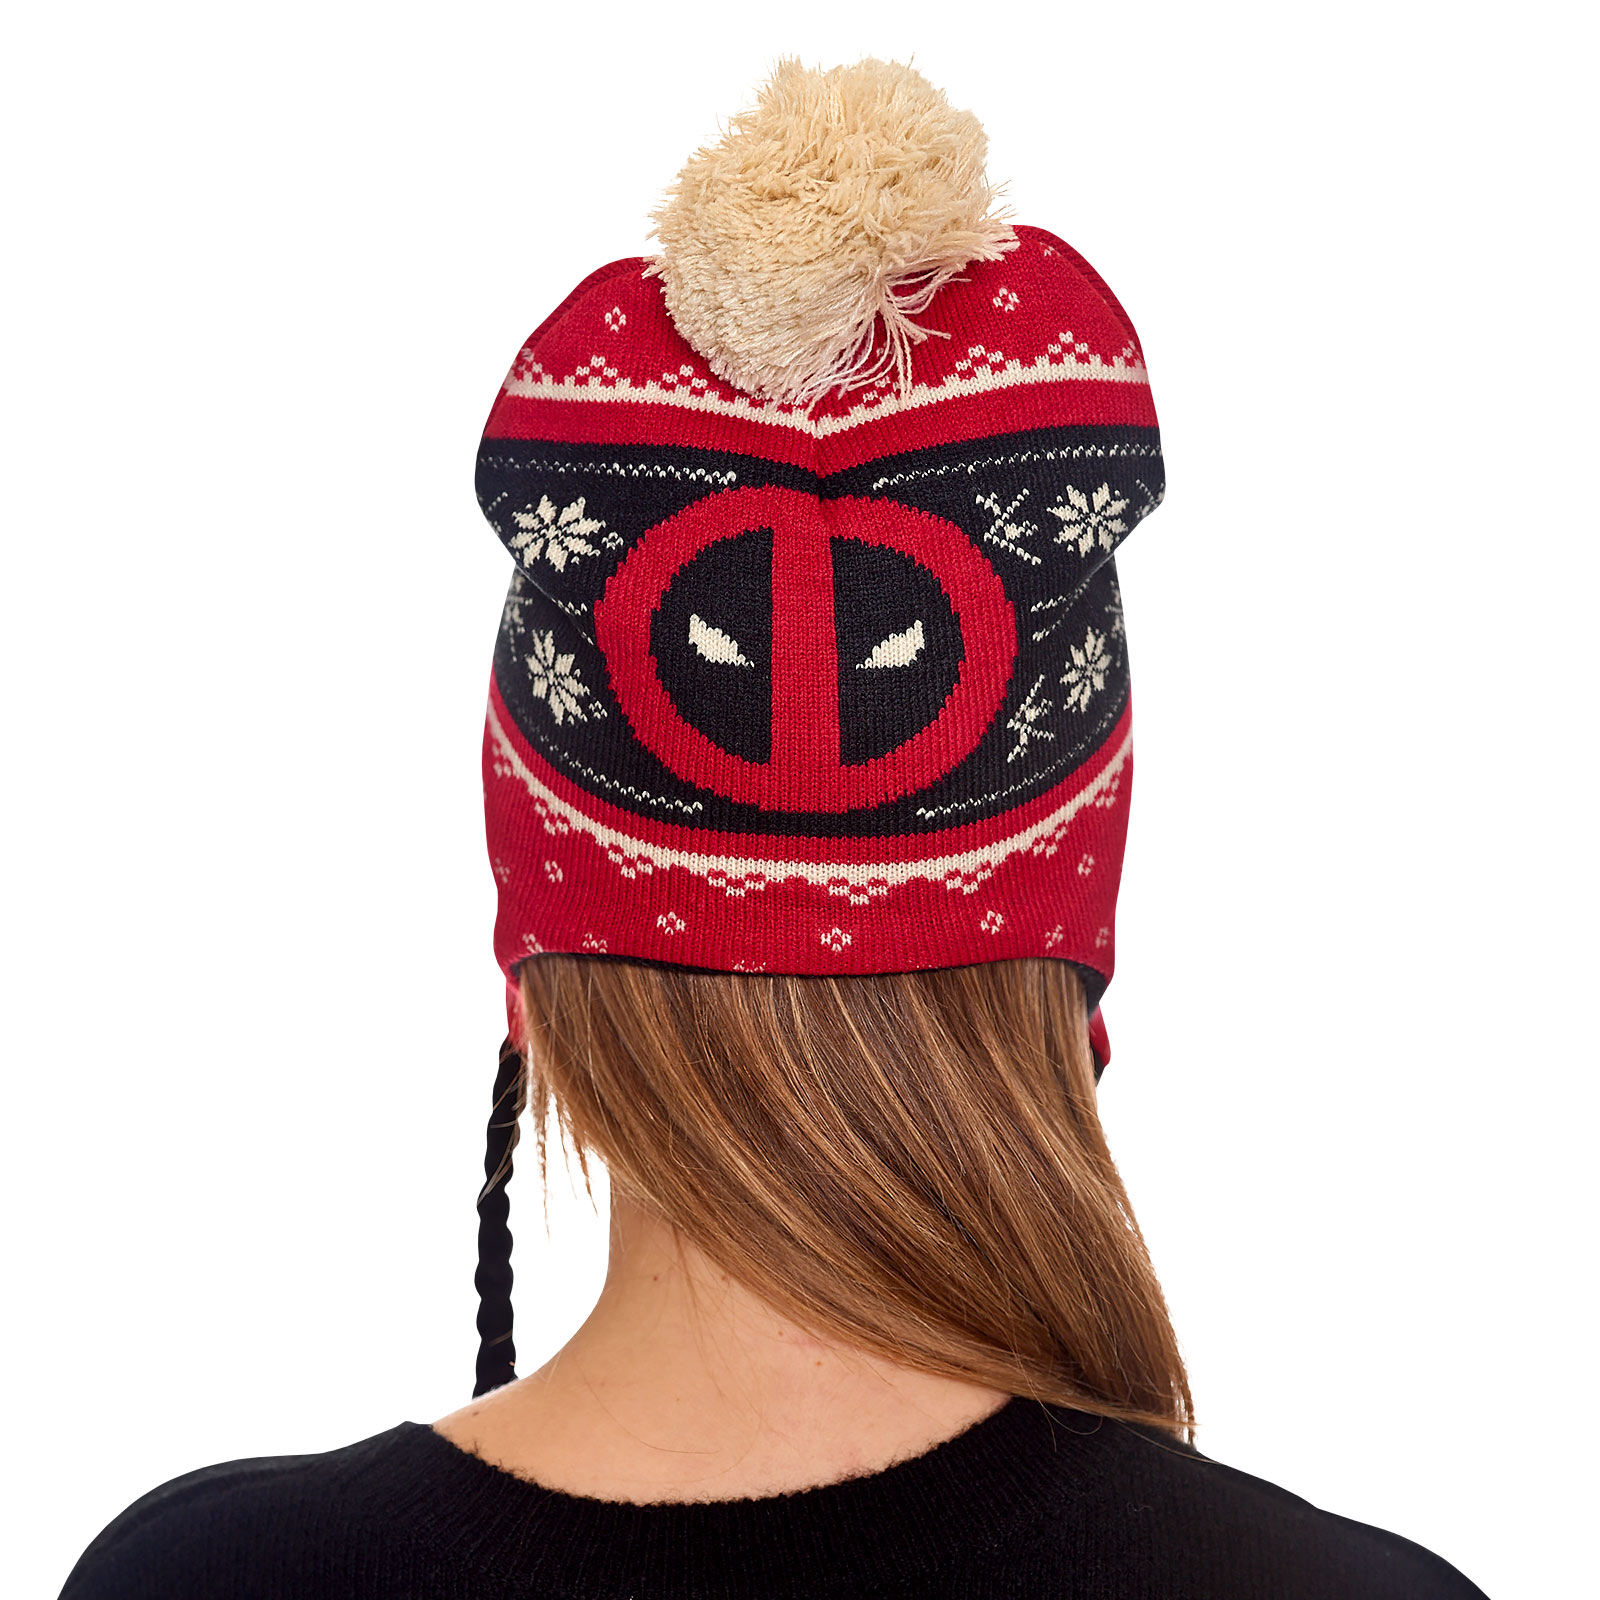 Deadpool - Logo Hat with Pom Poms